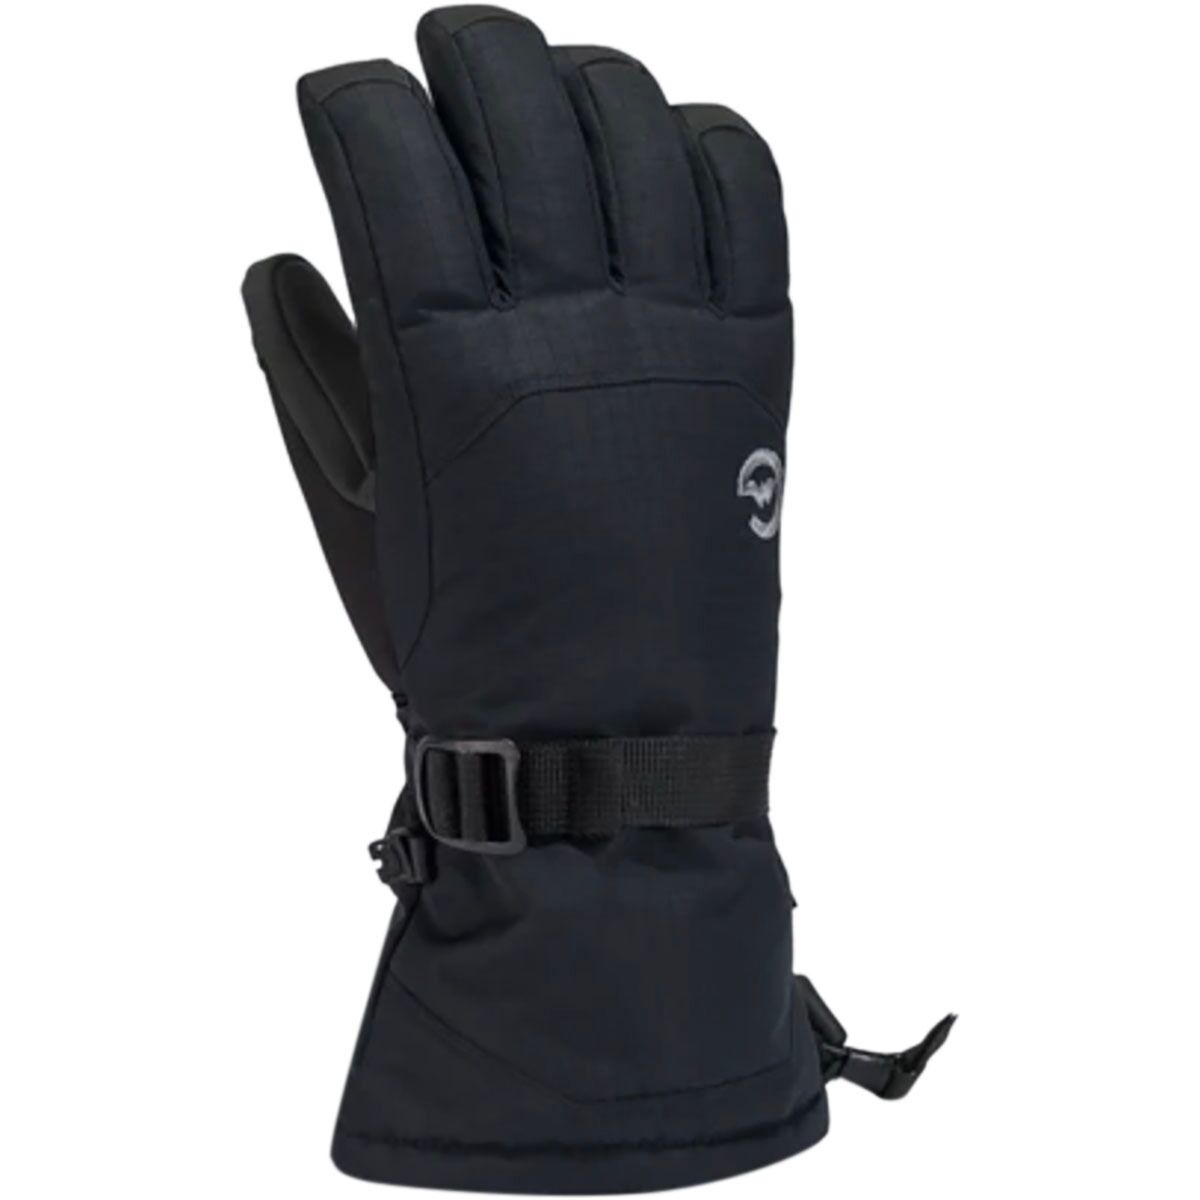 Gordini Foundation Glove - Men's Black